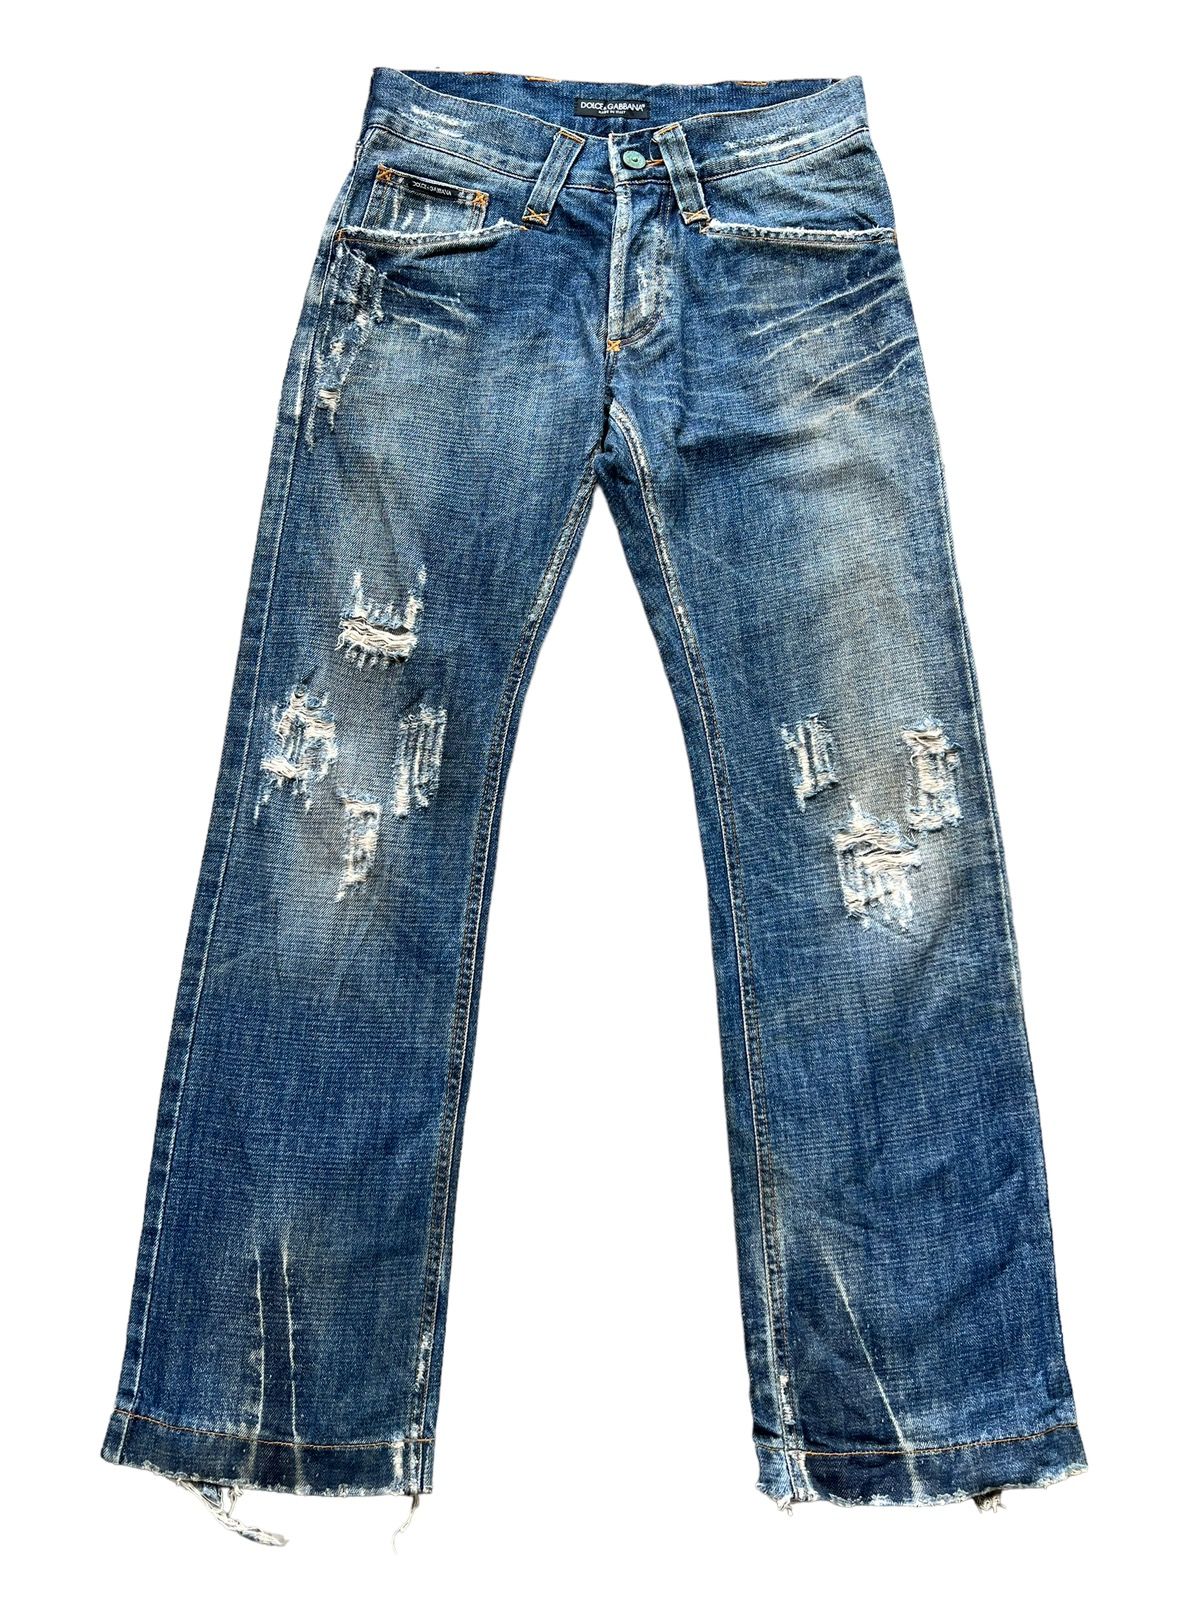 Dolce and Gabbana Crash Distressed Denim Jeans 31x32.5 - 3